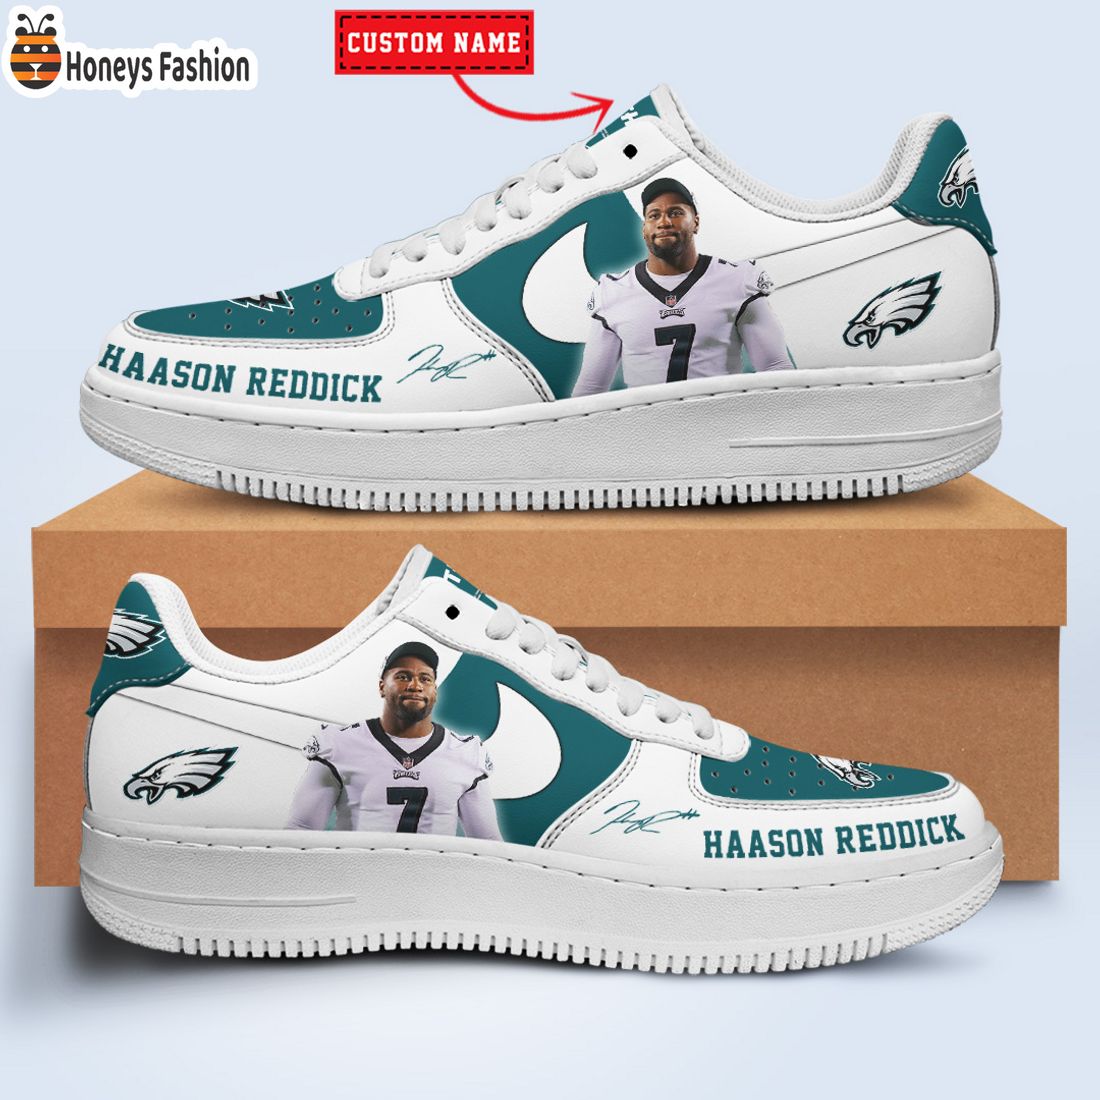 TOP SELLER Haason Reddick Philadelphia Eagles NFL Custom Name Nike Air Force Shoes